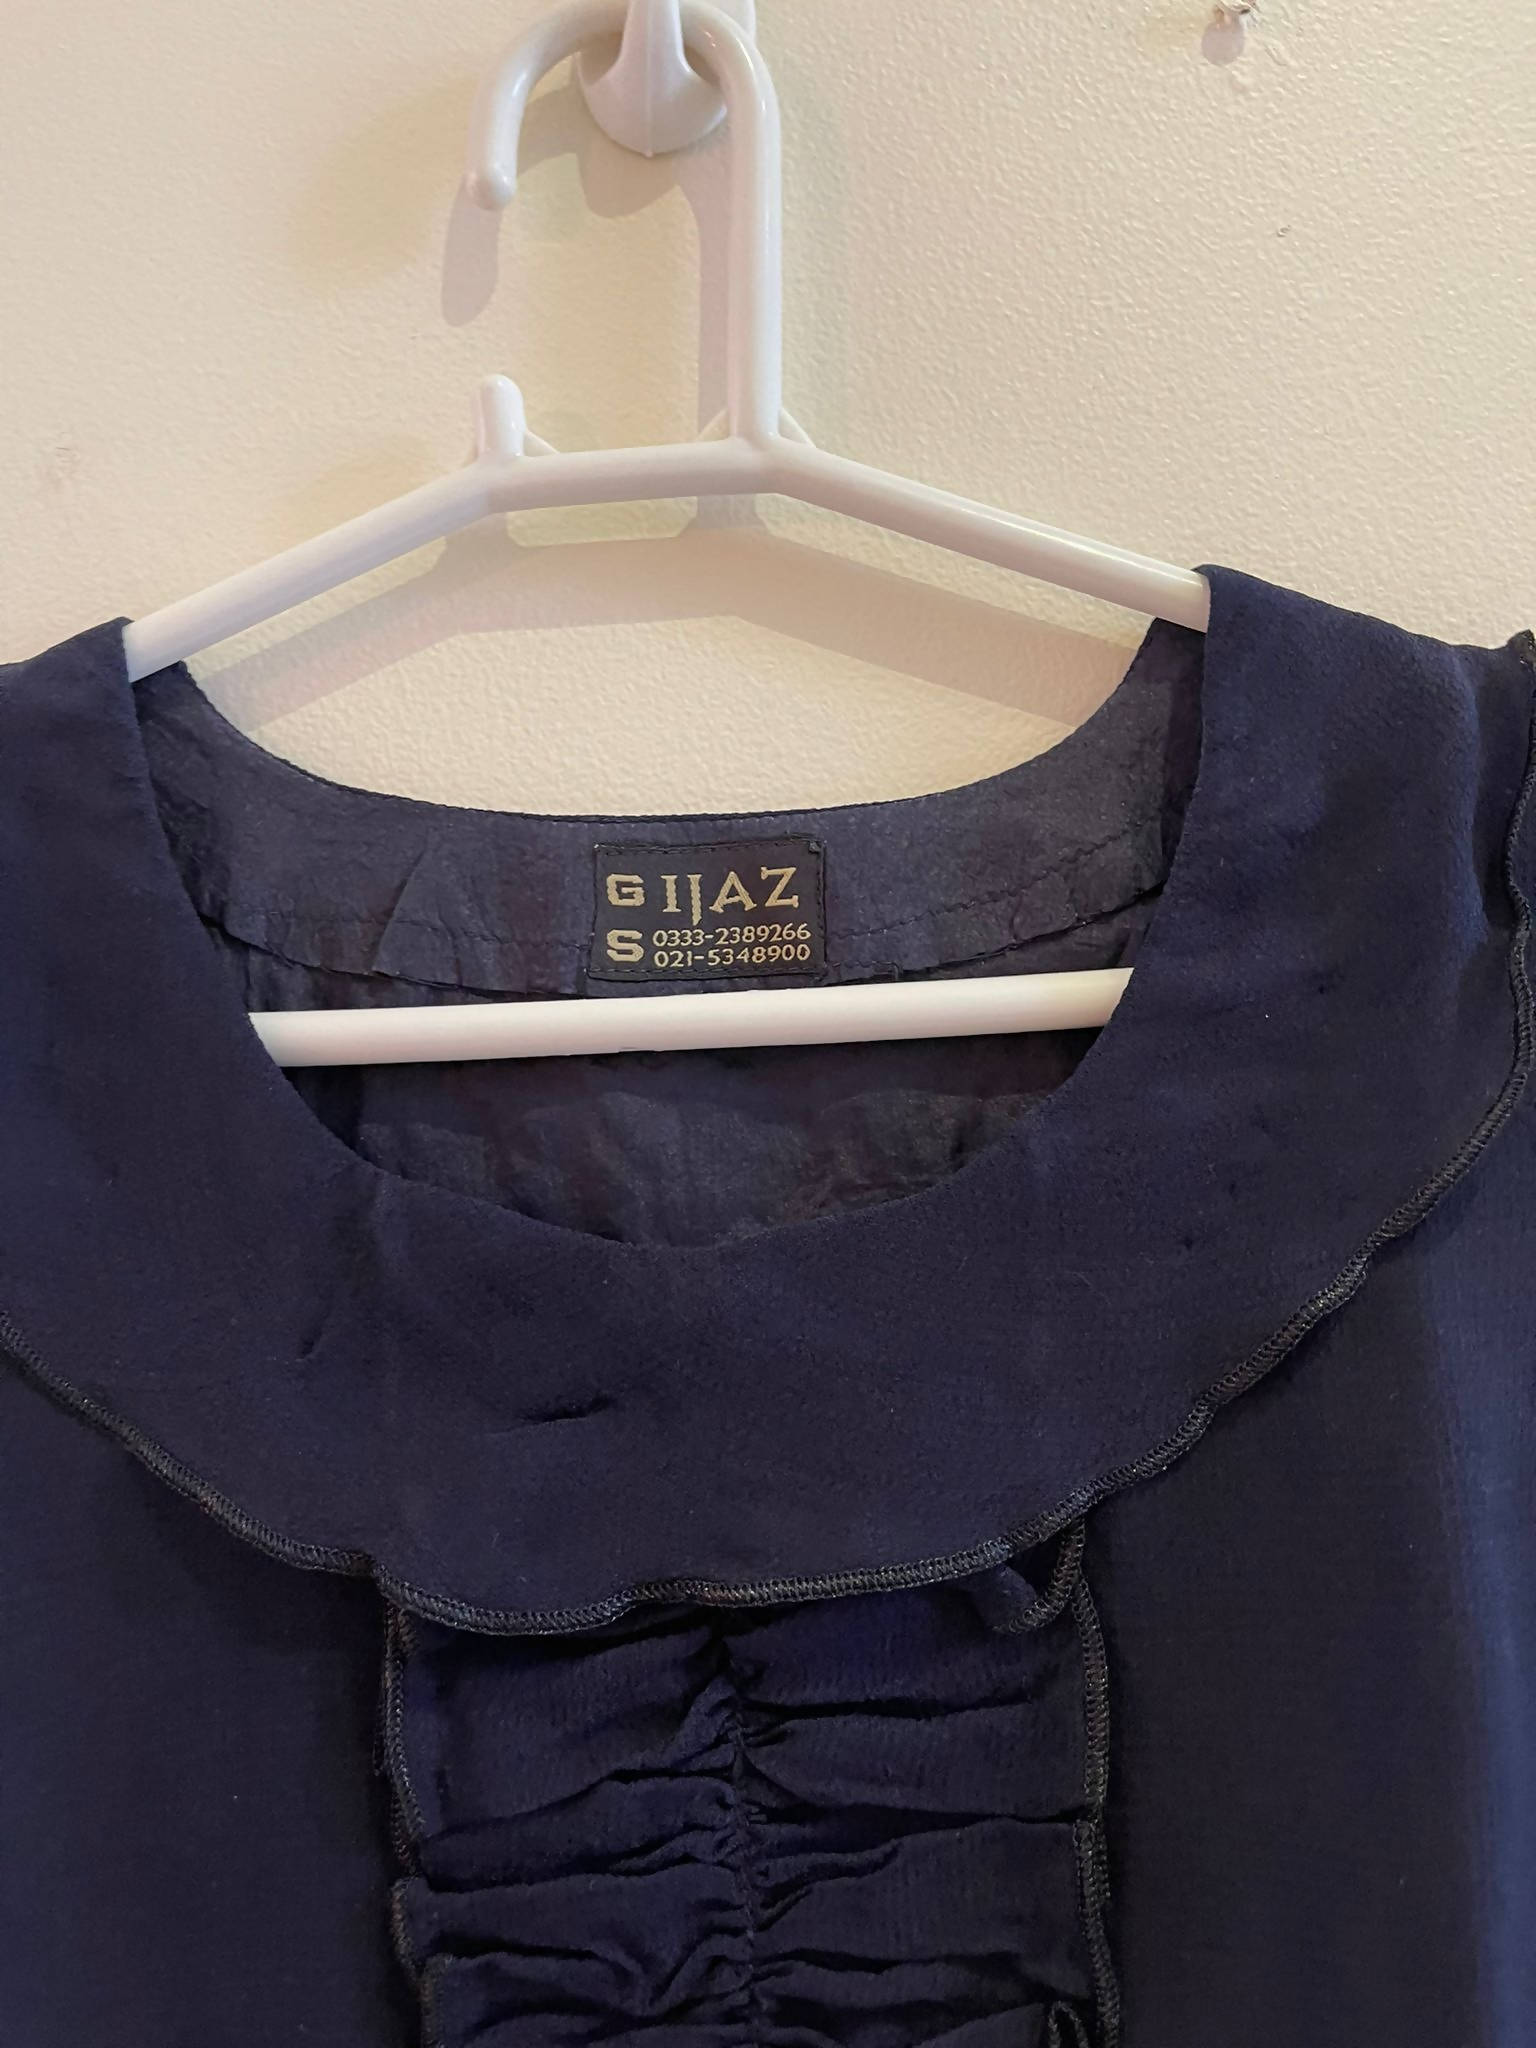 Sleeveless Navy Blue Top | Women Tops & Shirts | Preloved